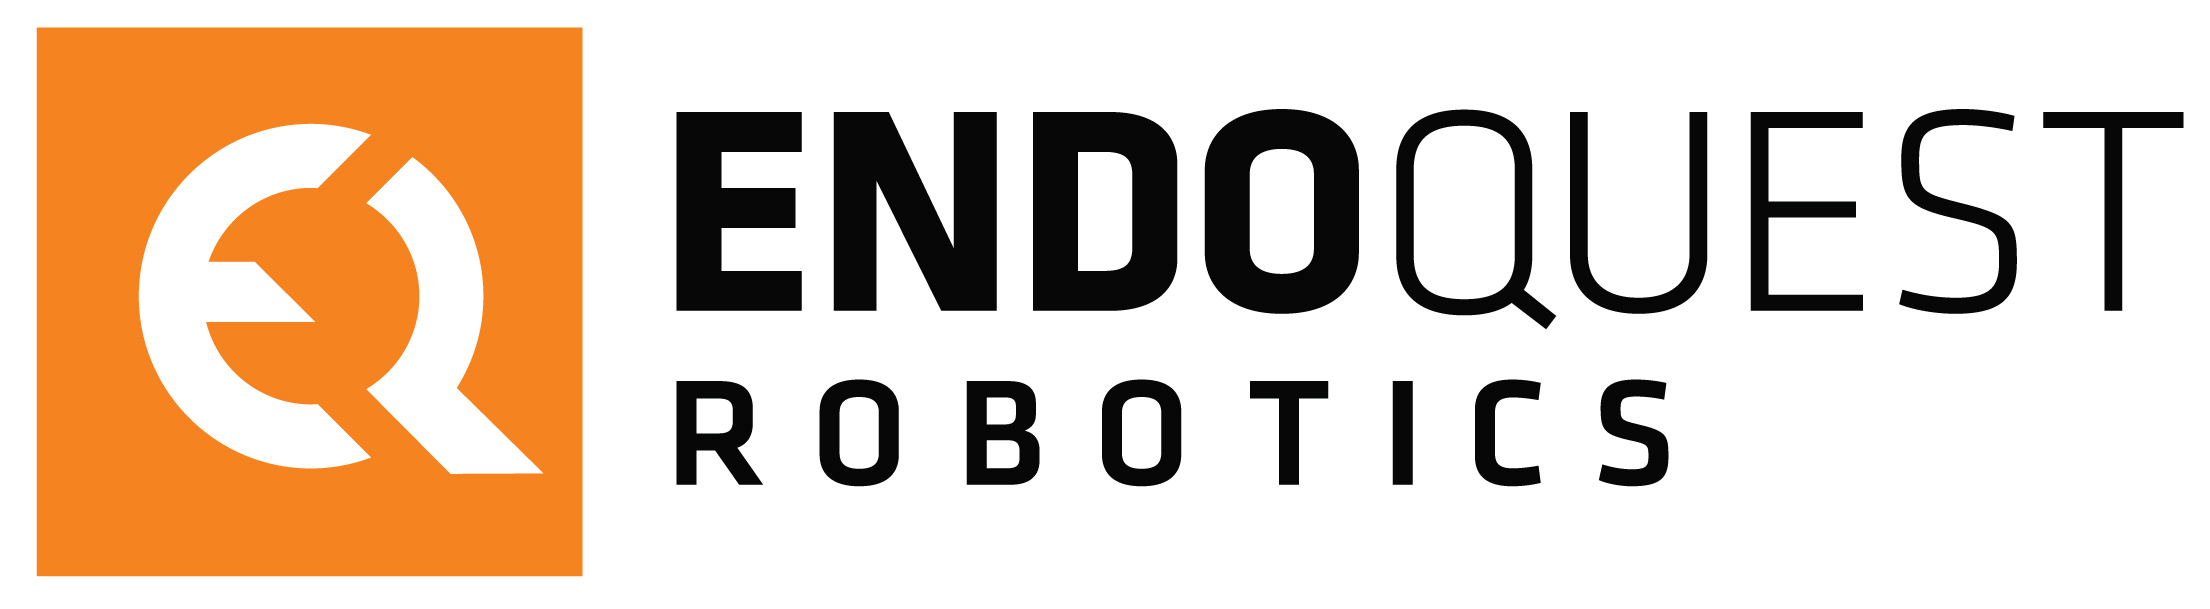 EndoQuest Robotics, Wednesday, January 25, 2023, Press release picture